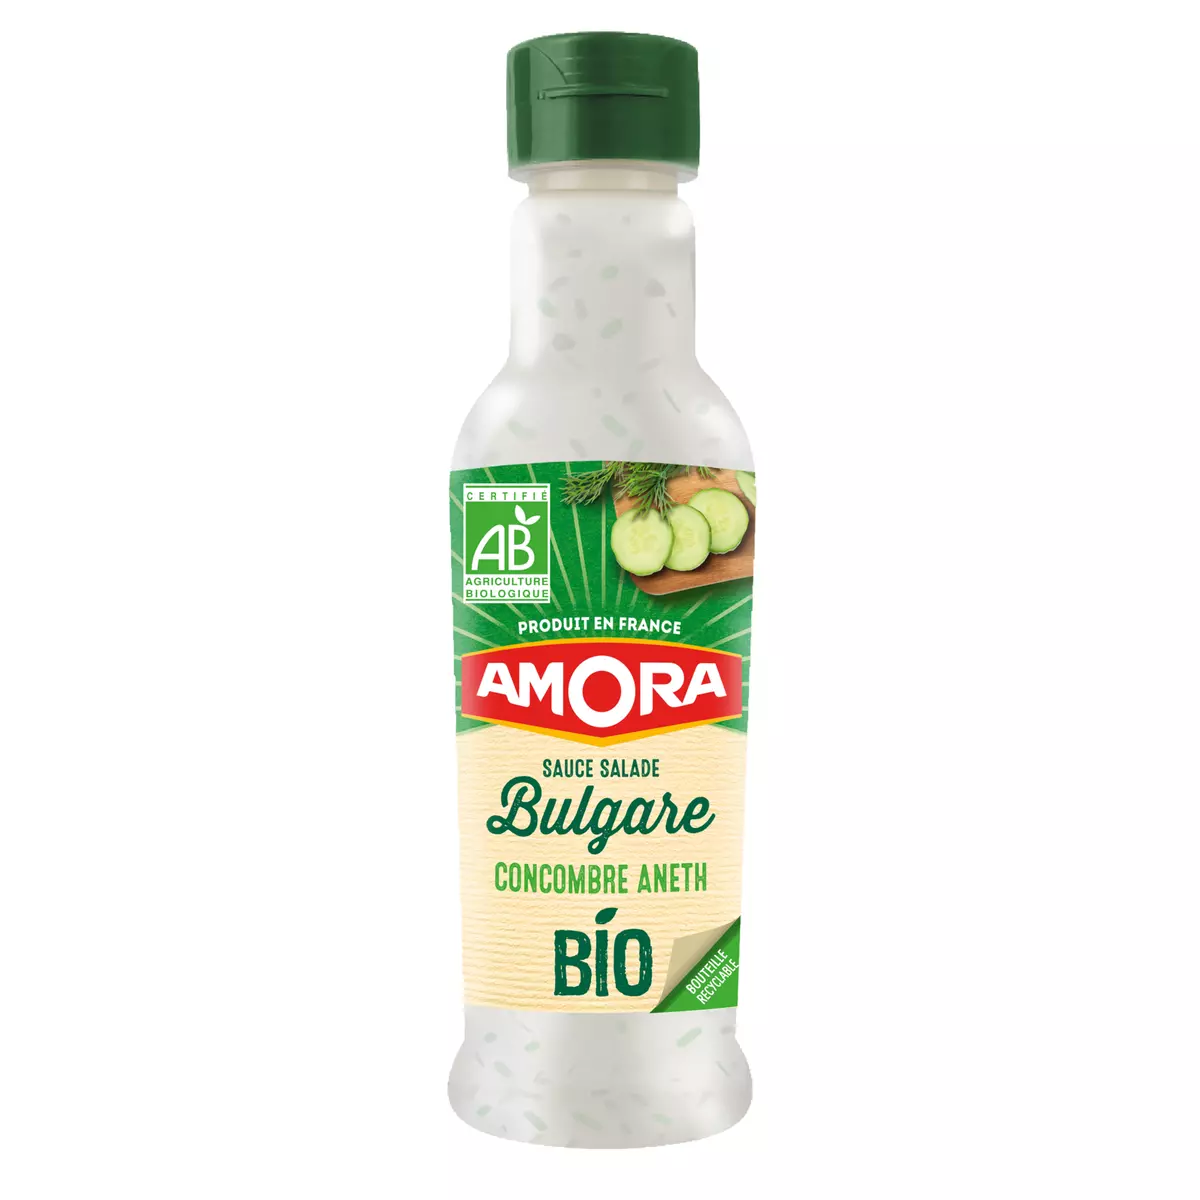 AMORA Sauce salade bulgare bio concombre aneth produit en France 210ml